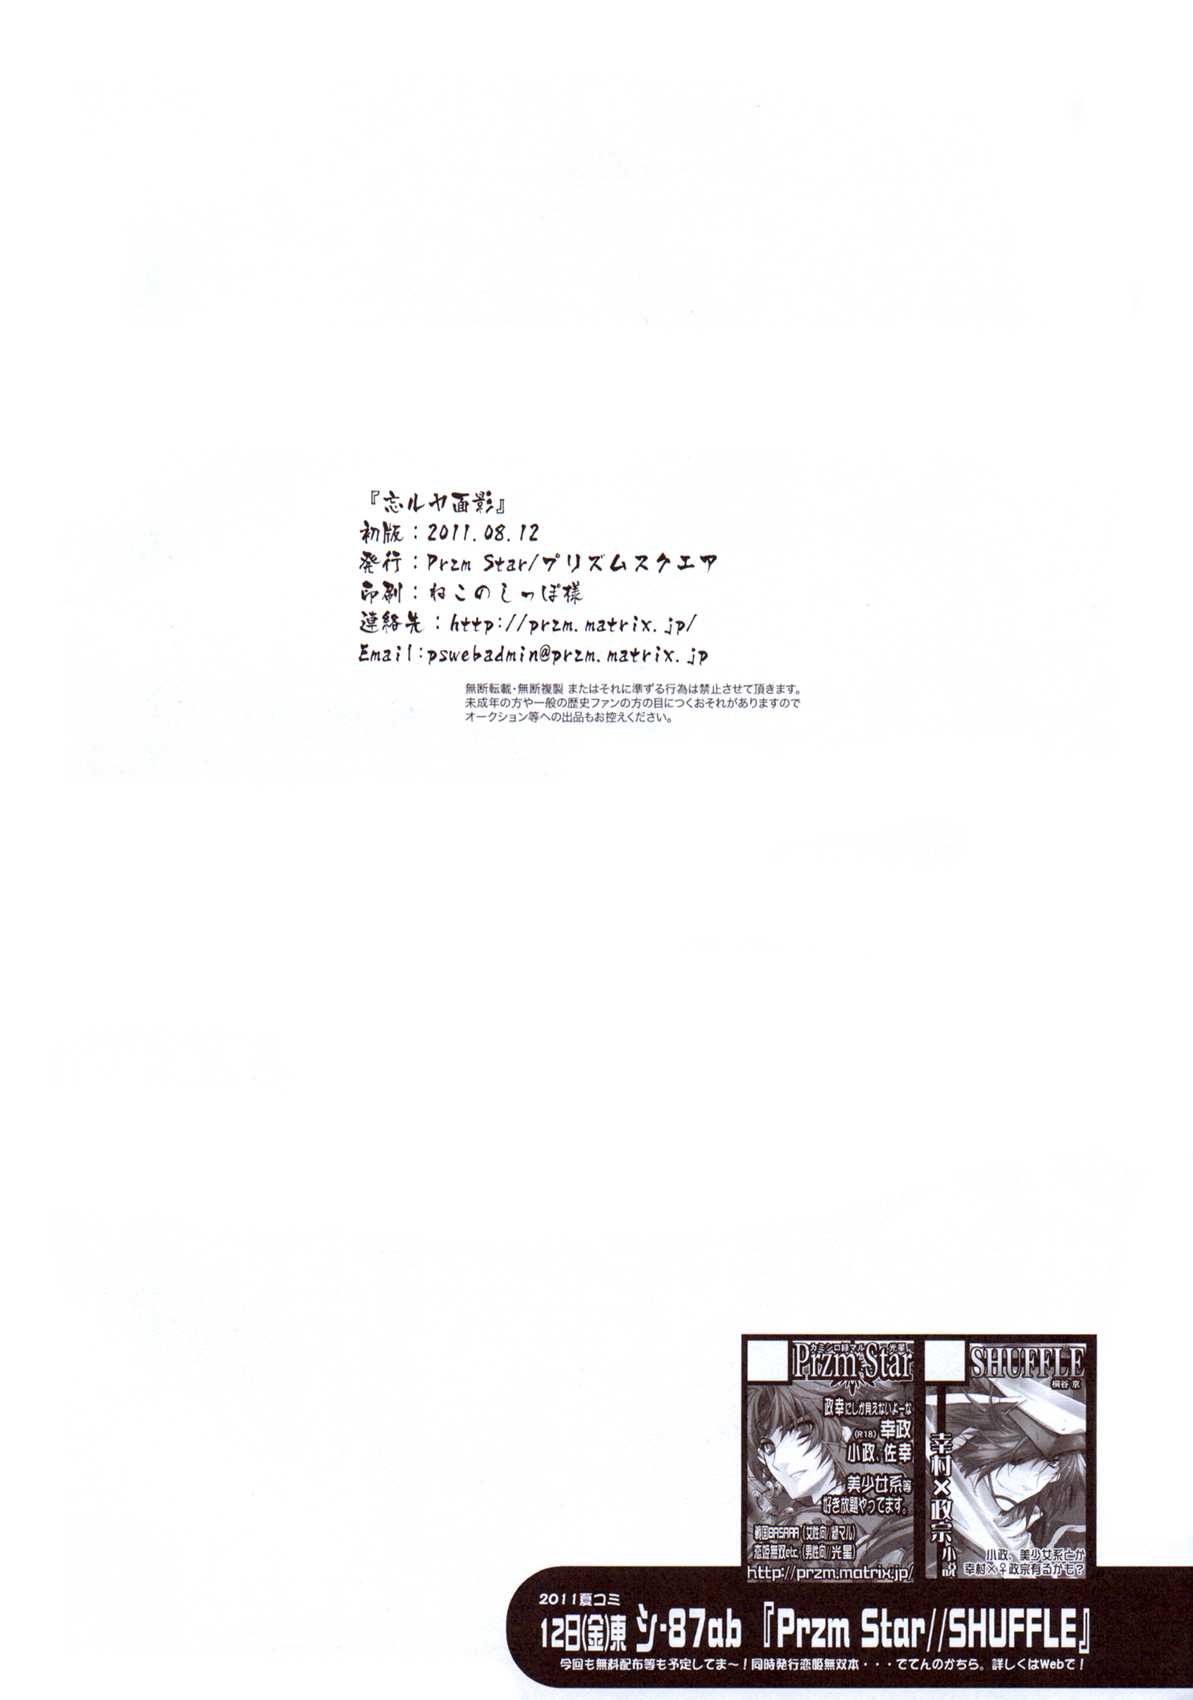 (C80) [Przm Star (Kamishiro Midorimaru, Kanshin)] Wasuruya Omokage (Sengoku Otome) (C80) [Przm Star (カミシロ緑マル、光星)] 忘ルヤ面影 (戦国乙女)